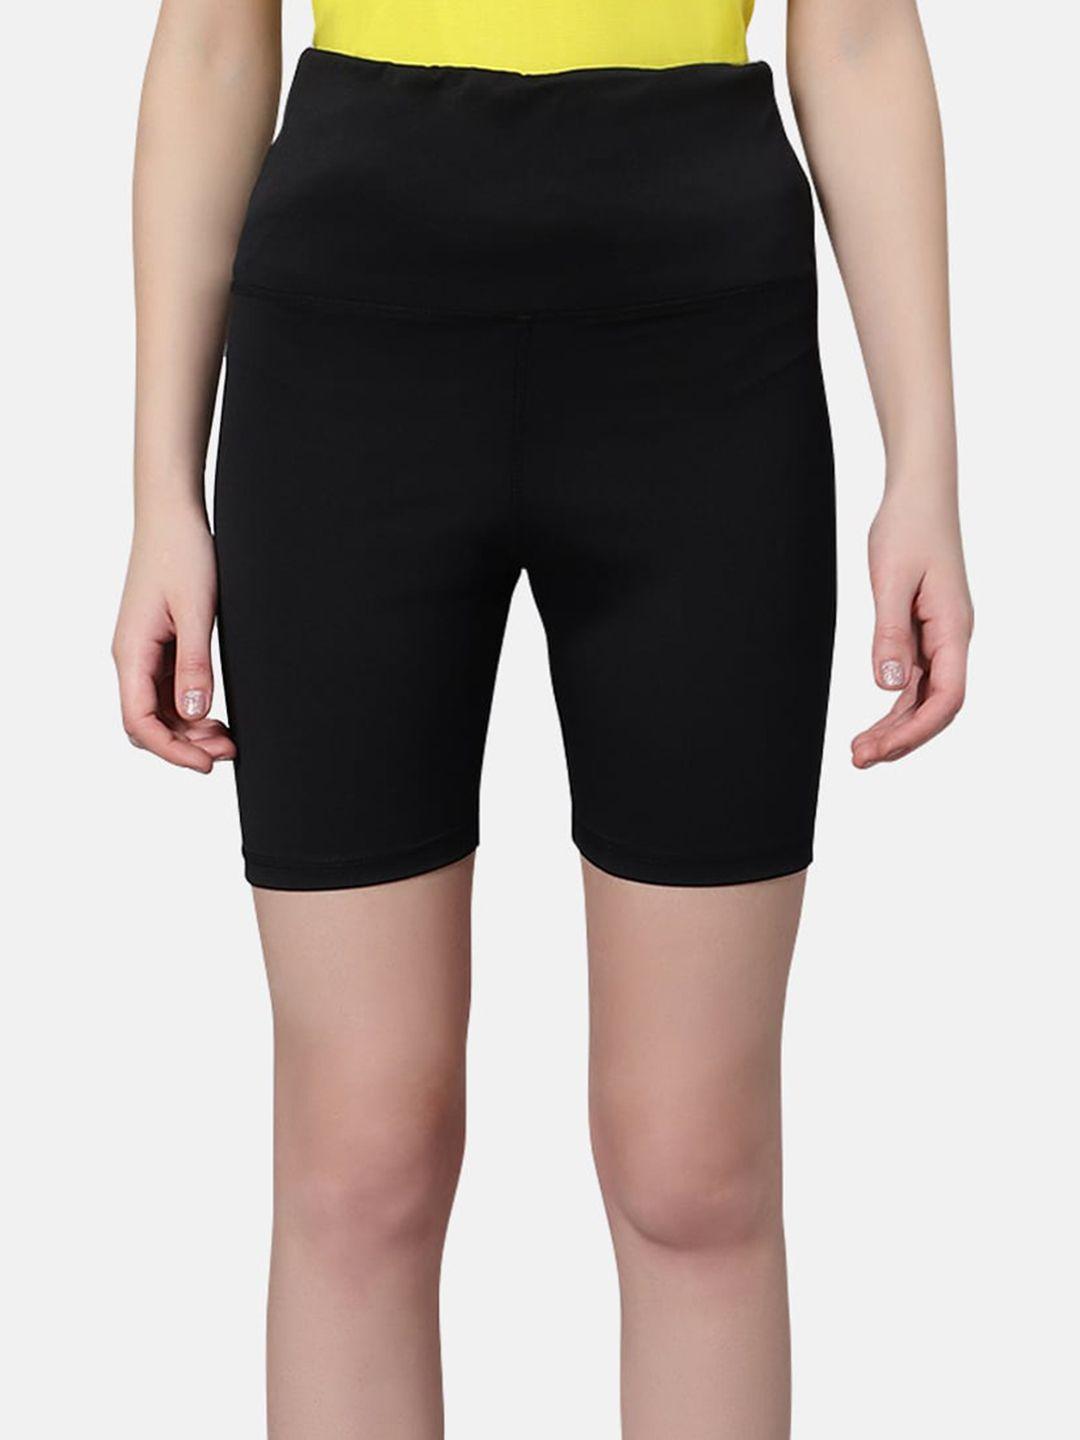 omtex-women-skinny-fit-high-rise-sports-shorts